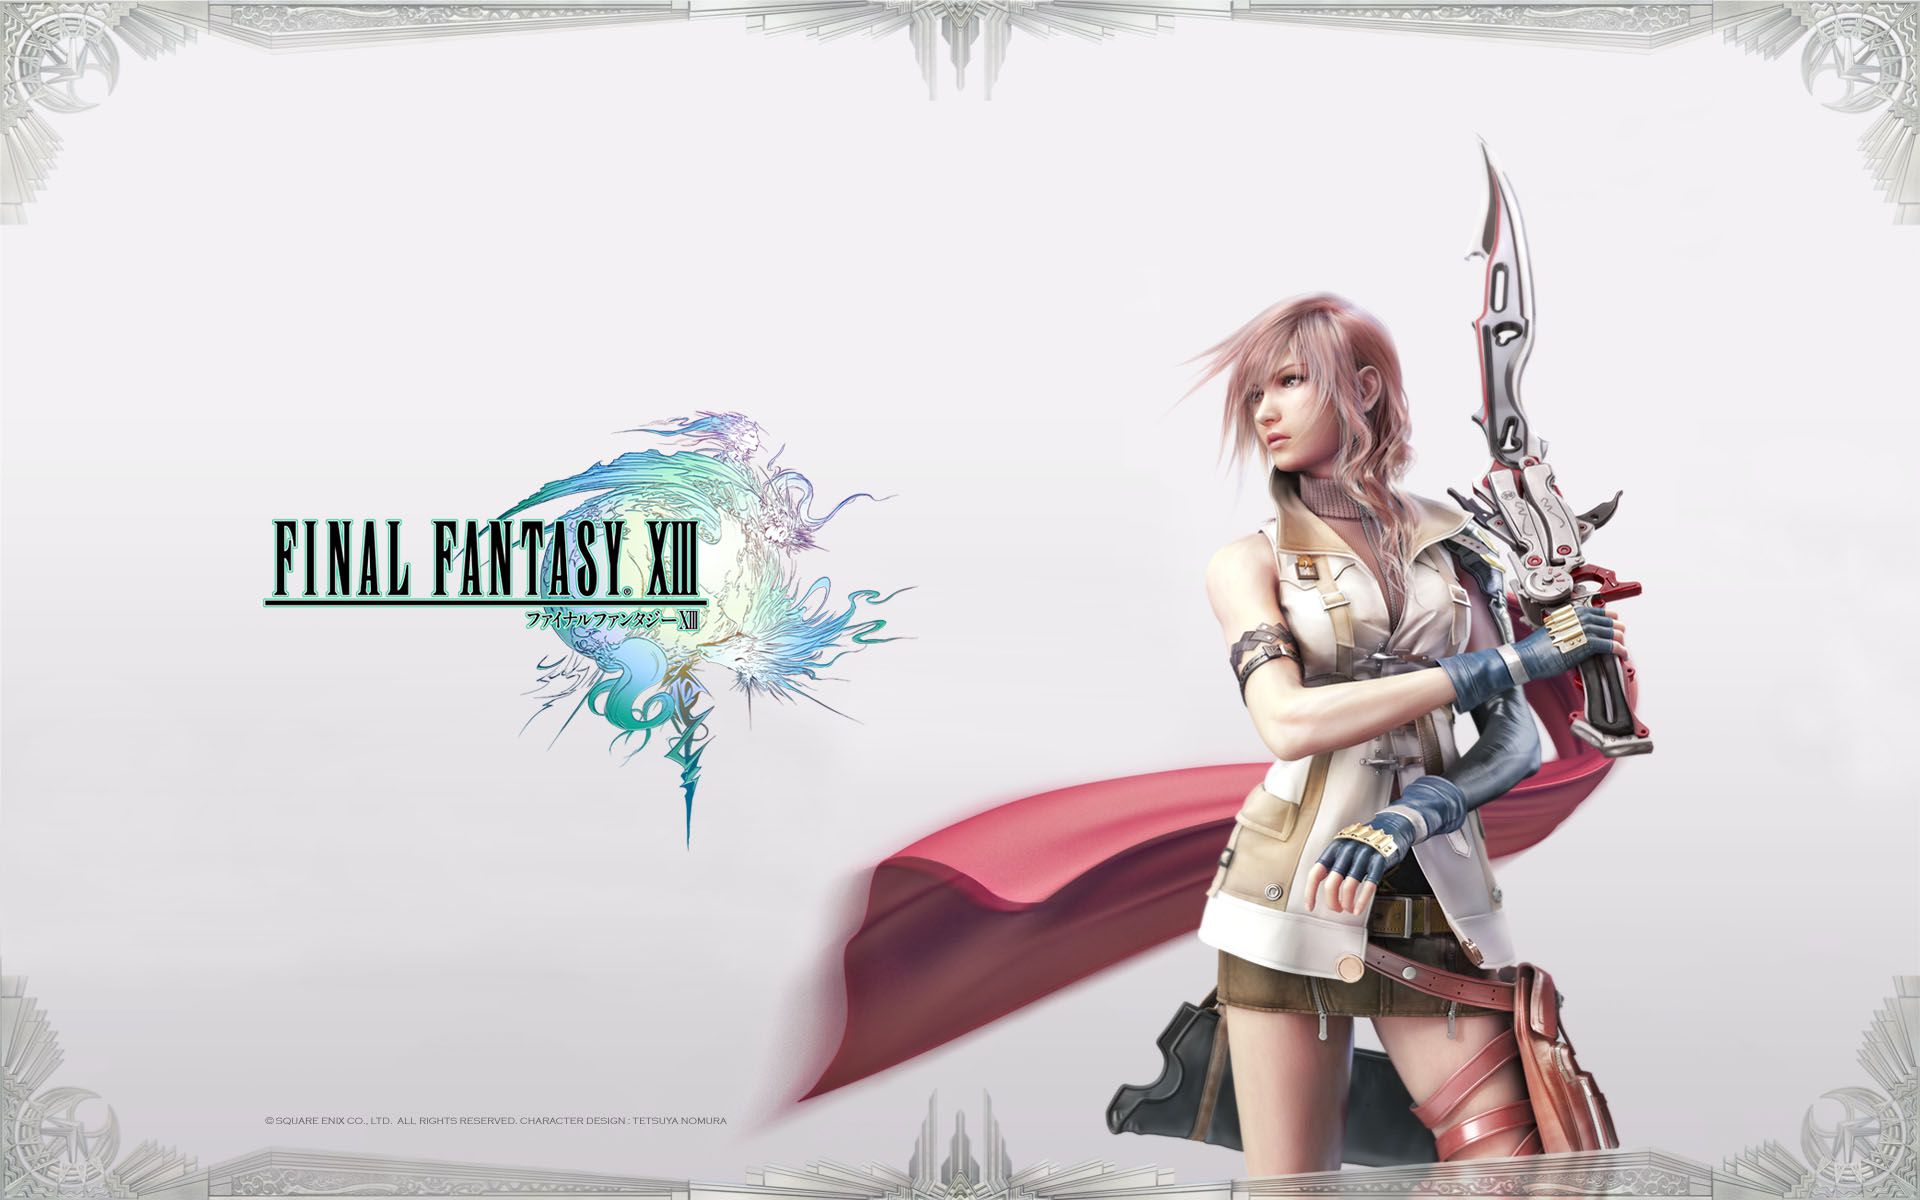 Fabula Nova Crystallis: Final Fantasy wallpapers - Final Fantasy ...